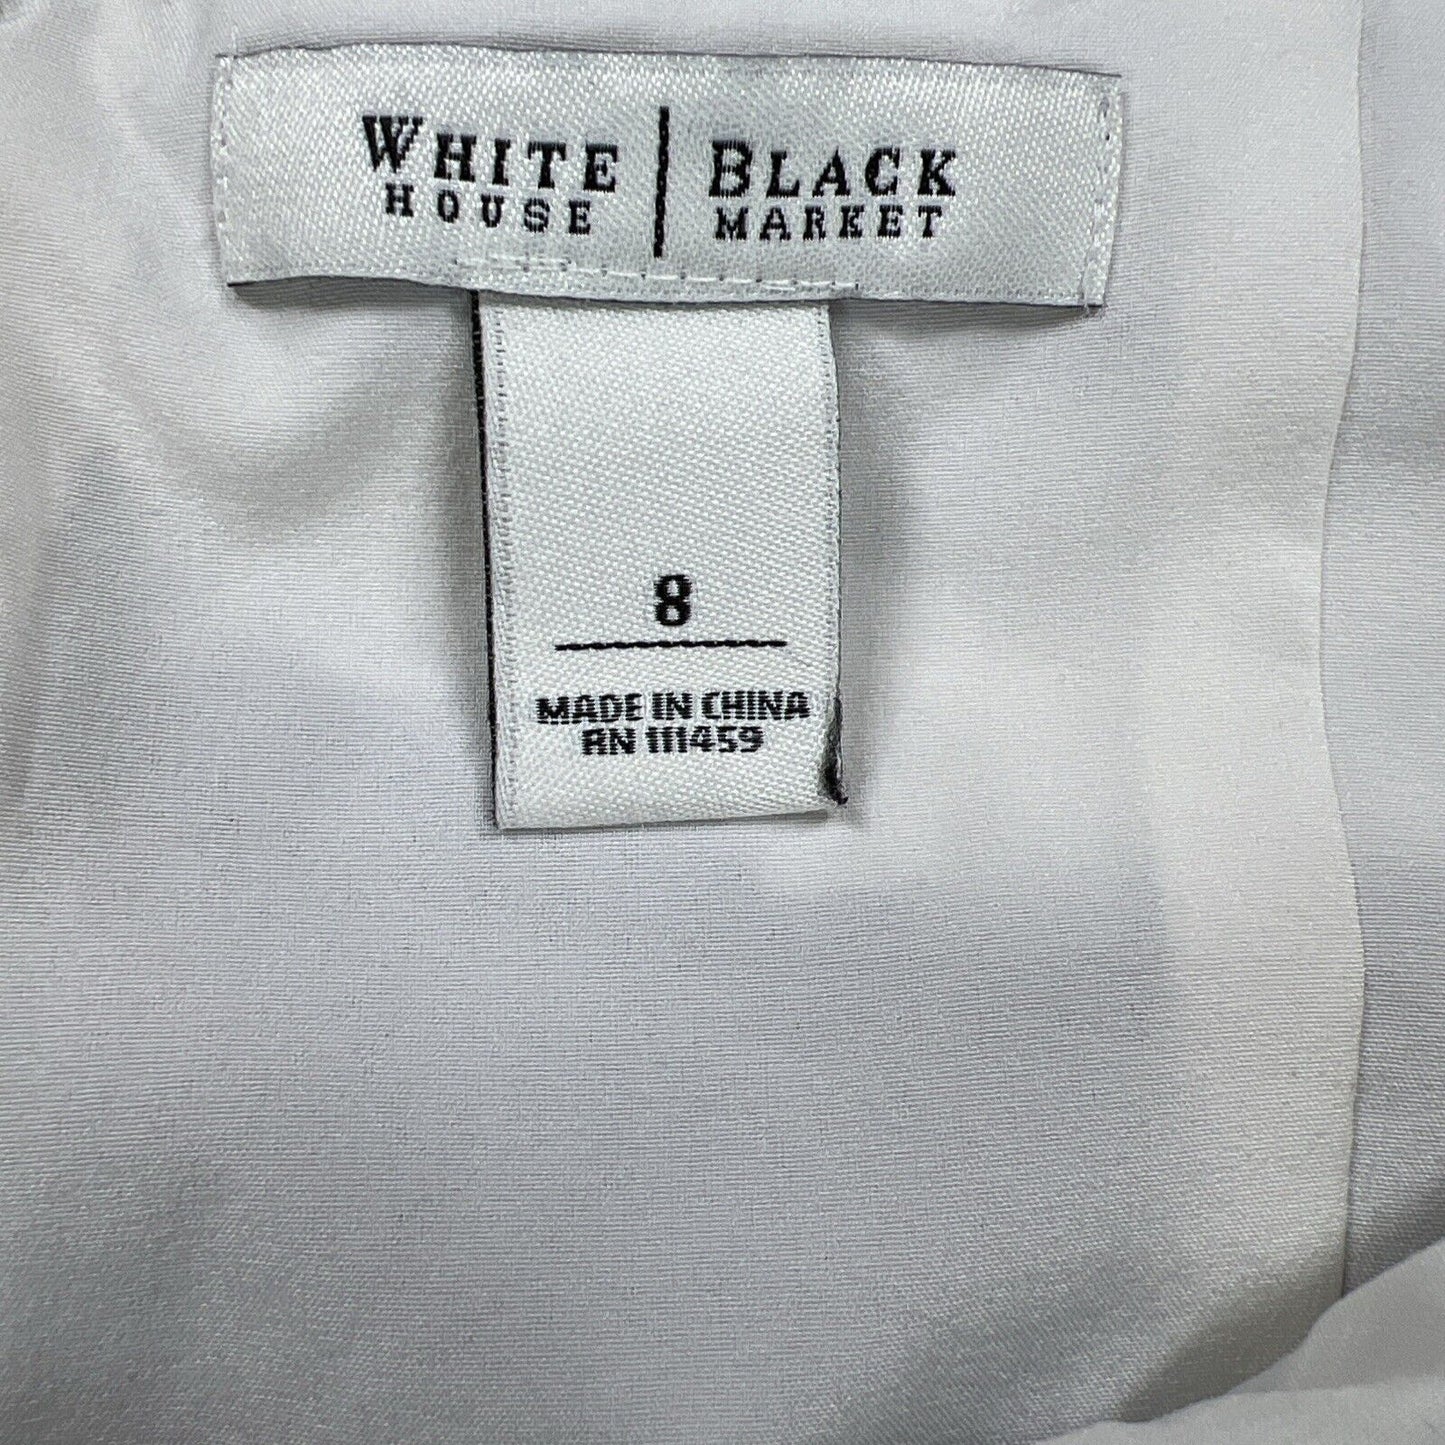 White House Black Market Women's White/Black Sleeveless A-Line Dress - 8